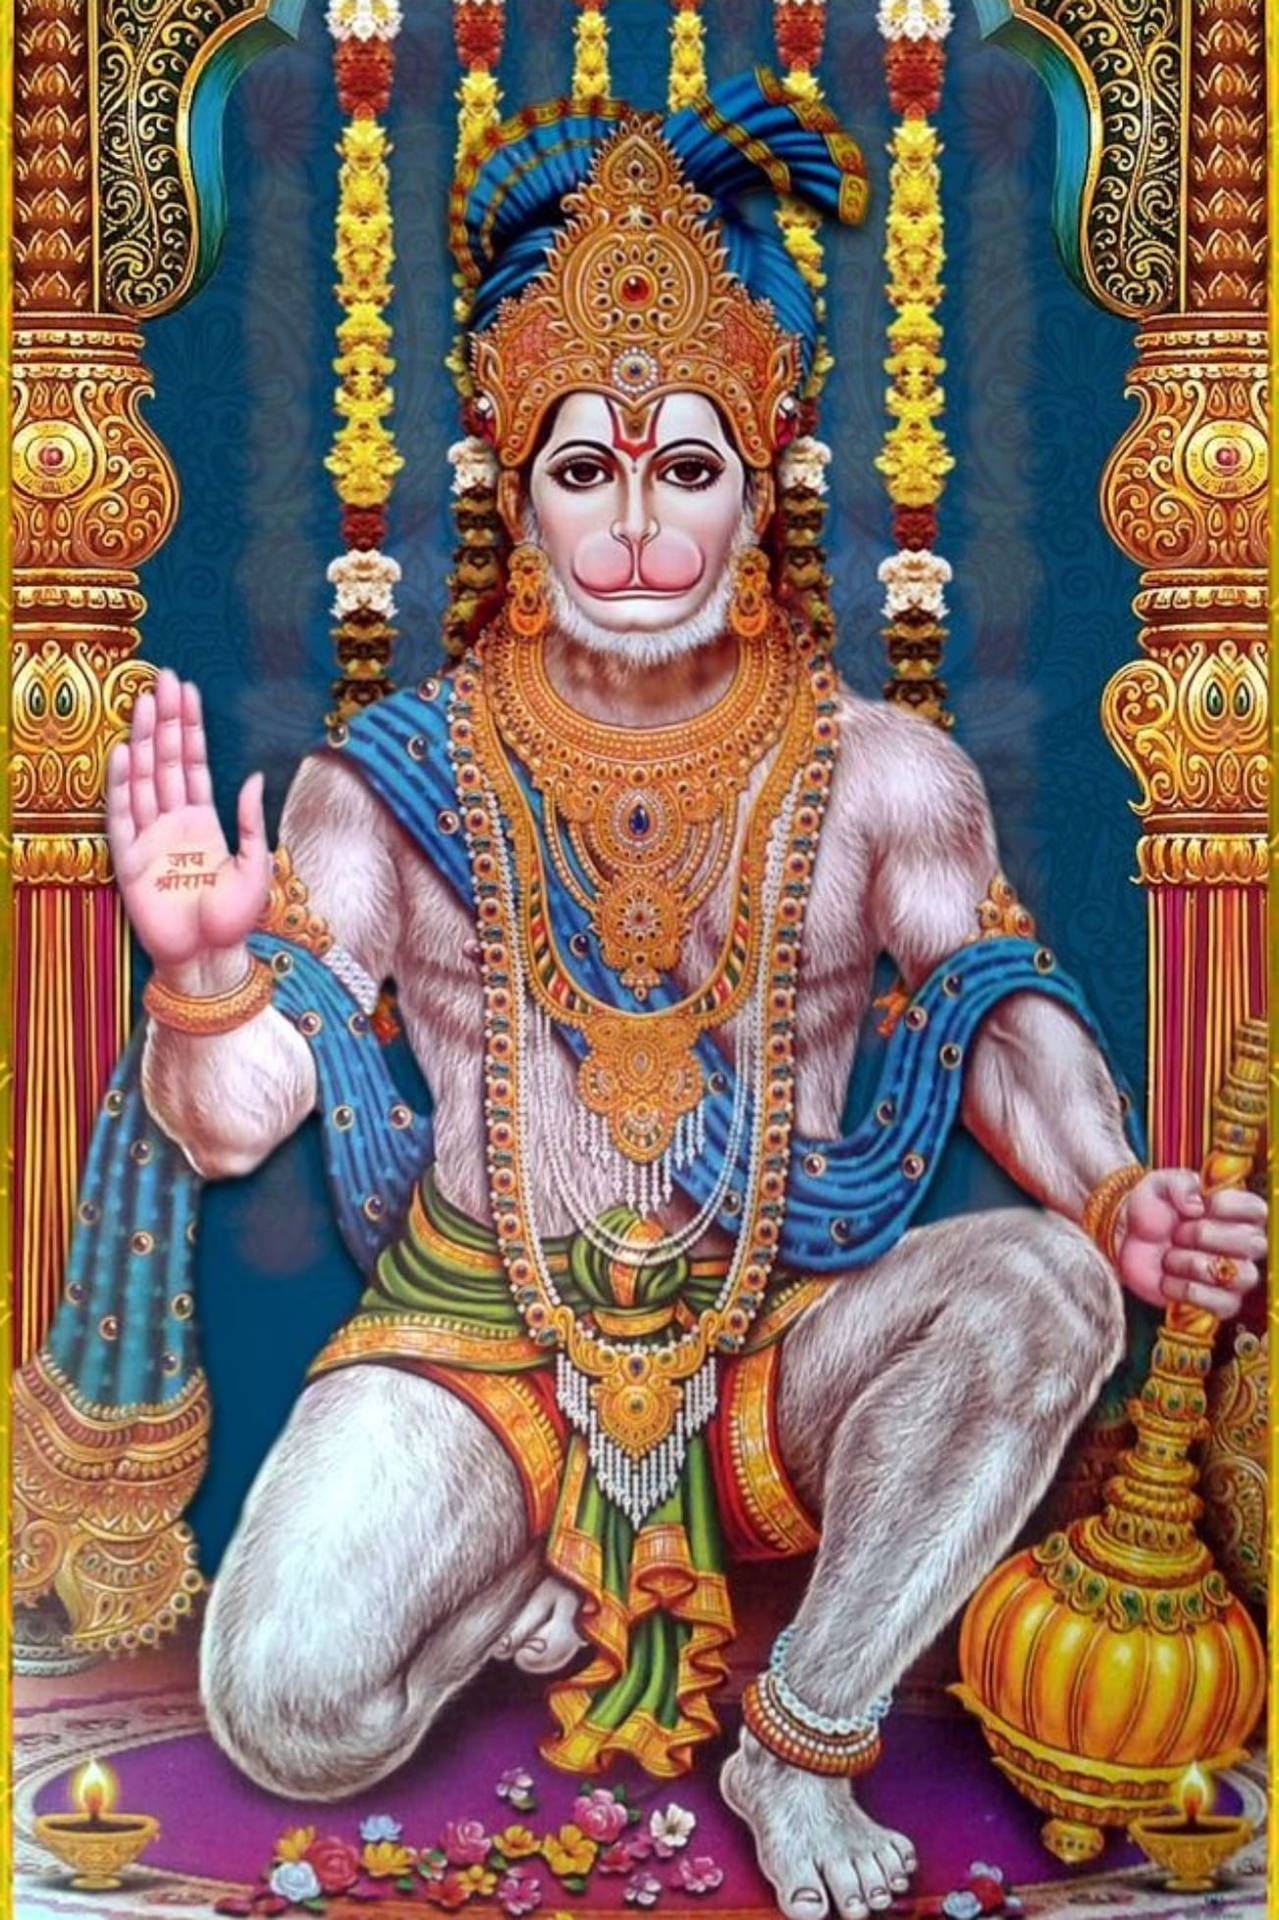 Colorful God Hanuman Of Hinduism